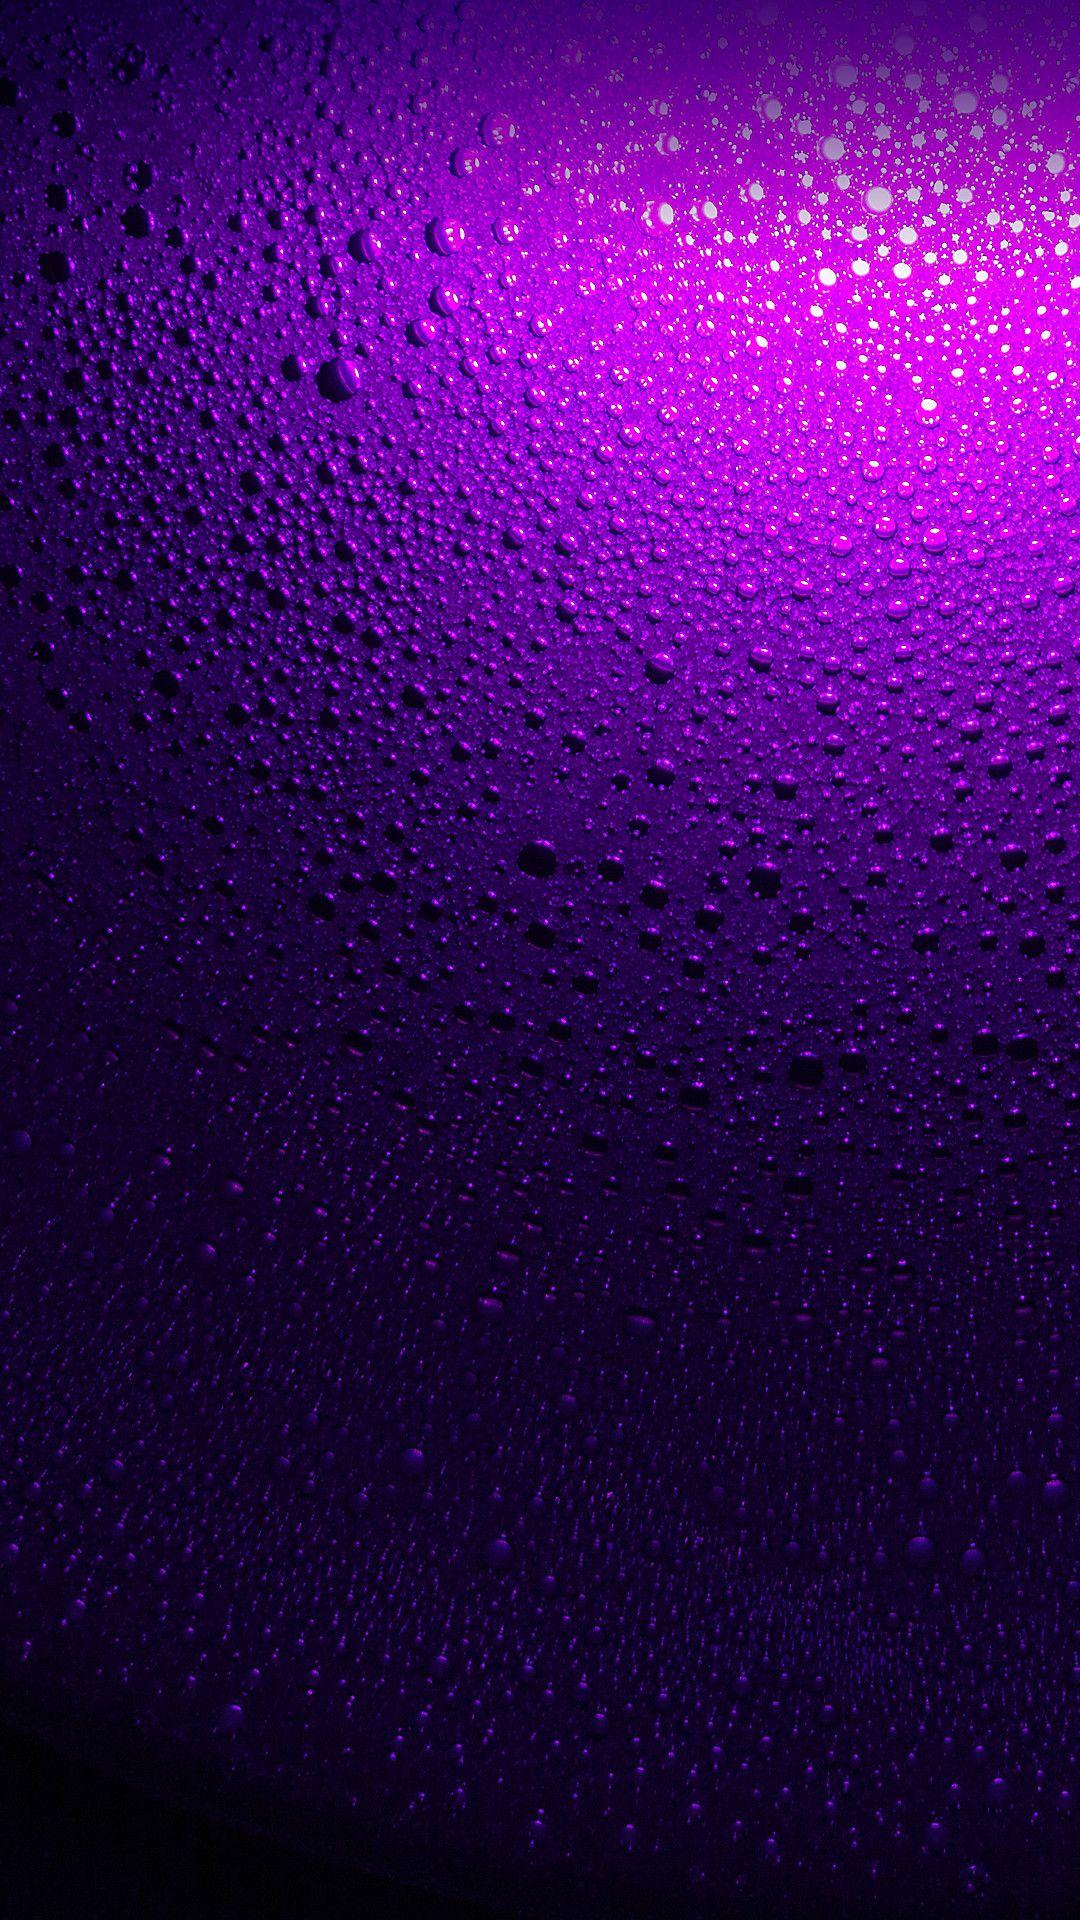 Windows 10 Mobile Hd Wallpaper 1080x1920. Nokia Lumia 1520 Wallpaper Full HD (24). HD Phone Wallpaper, Purple Wallpaper, Phone Wallpaper